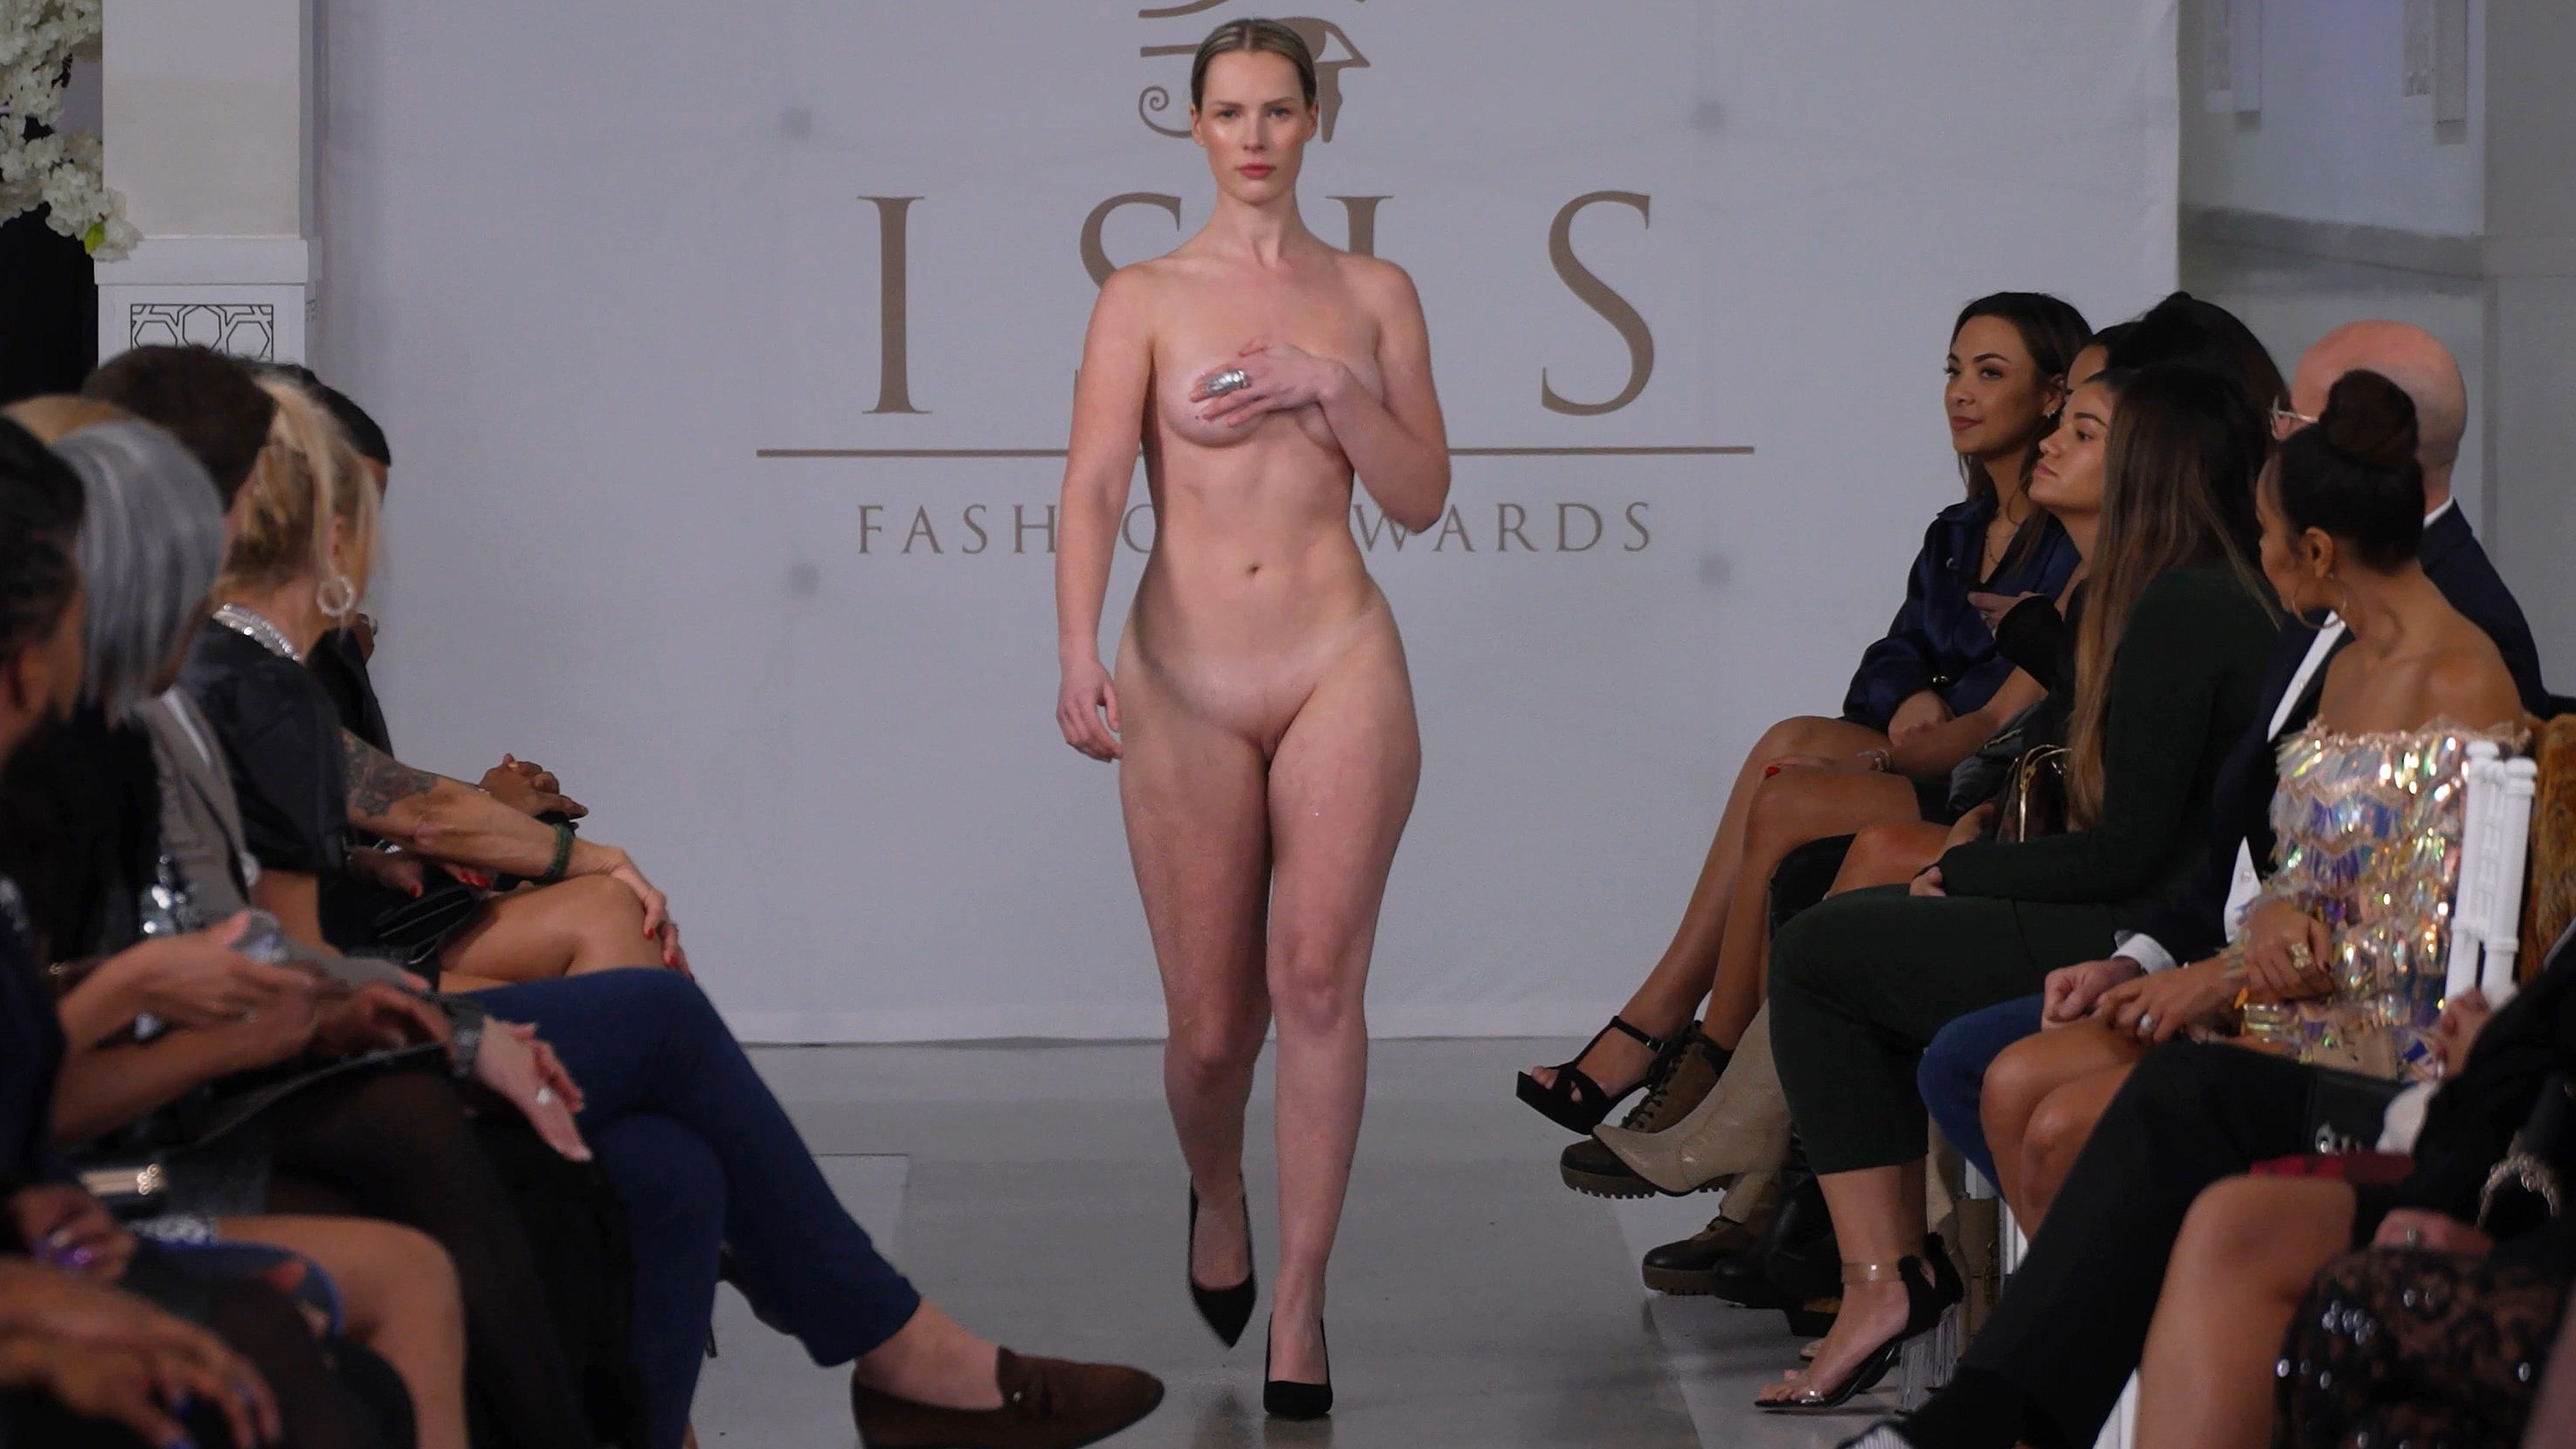 Nude Models Fashion Show - Isis Fashion Awards - TV